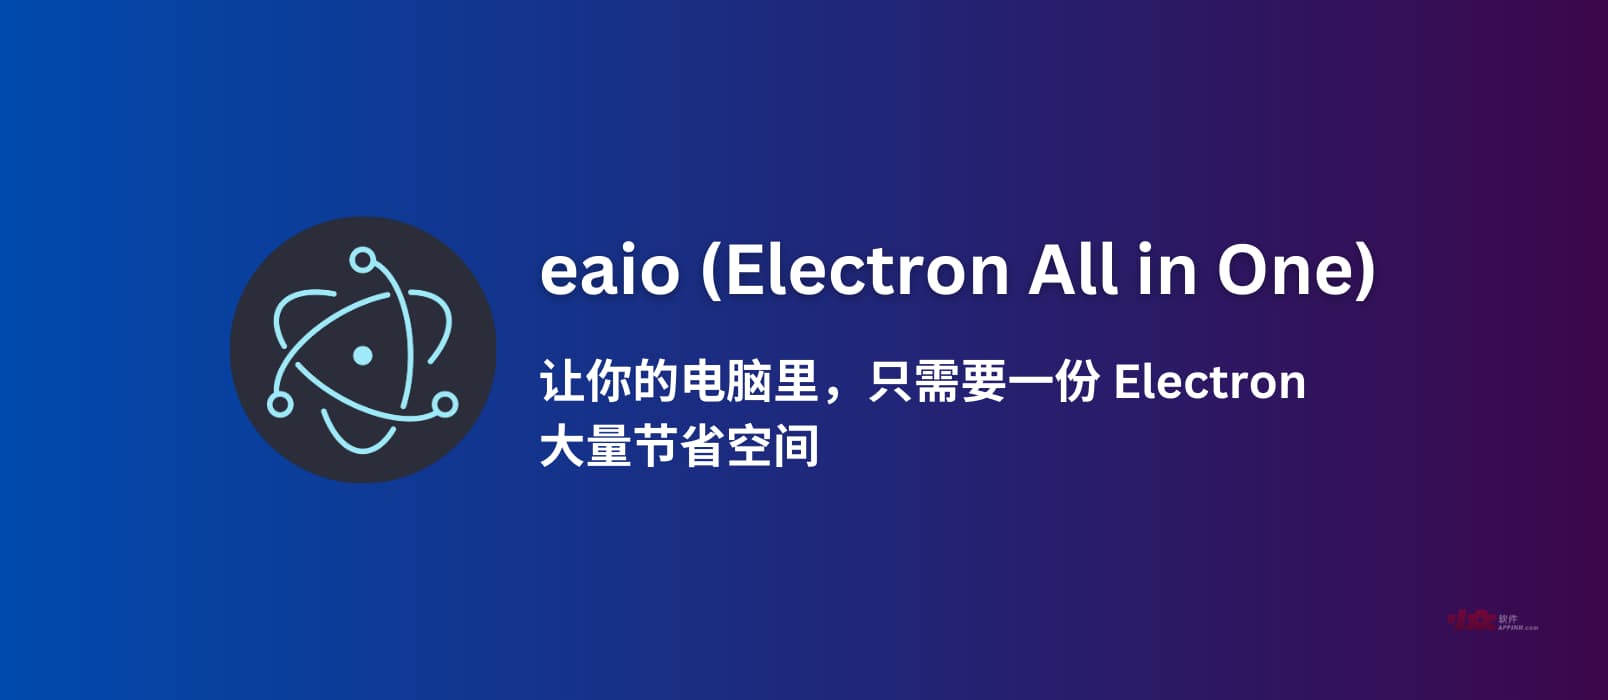 eaio (Electron All in One) - 让你的电脑里，只需要一份 Electron，大量节省空间。